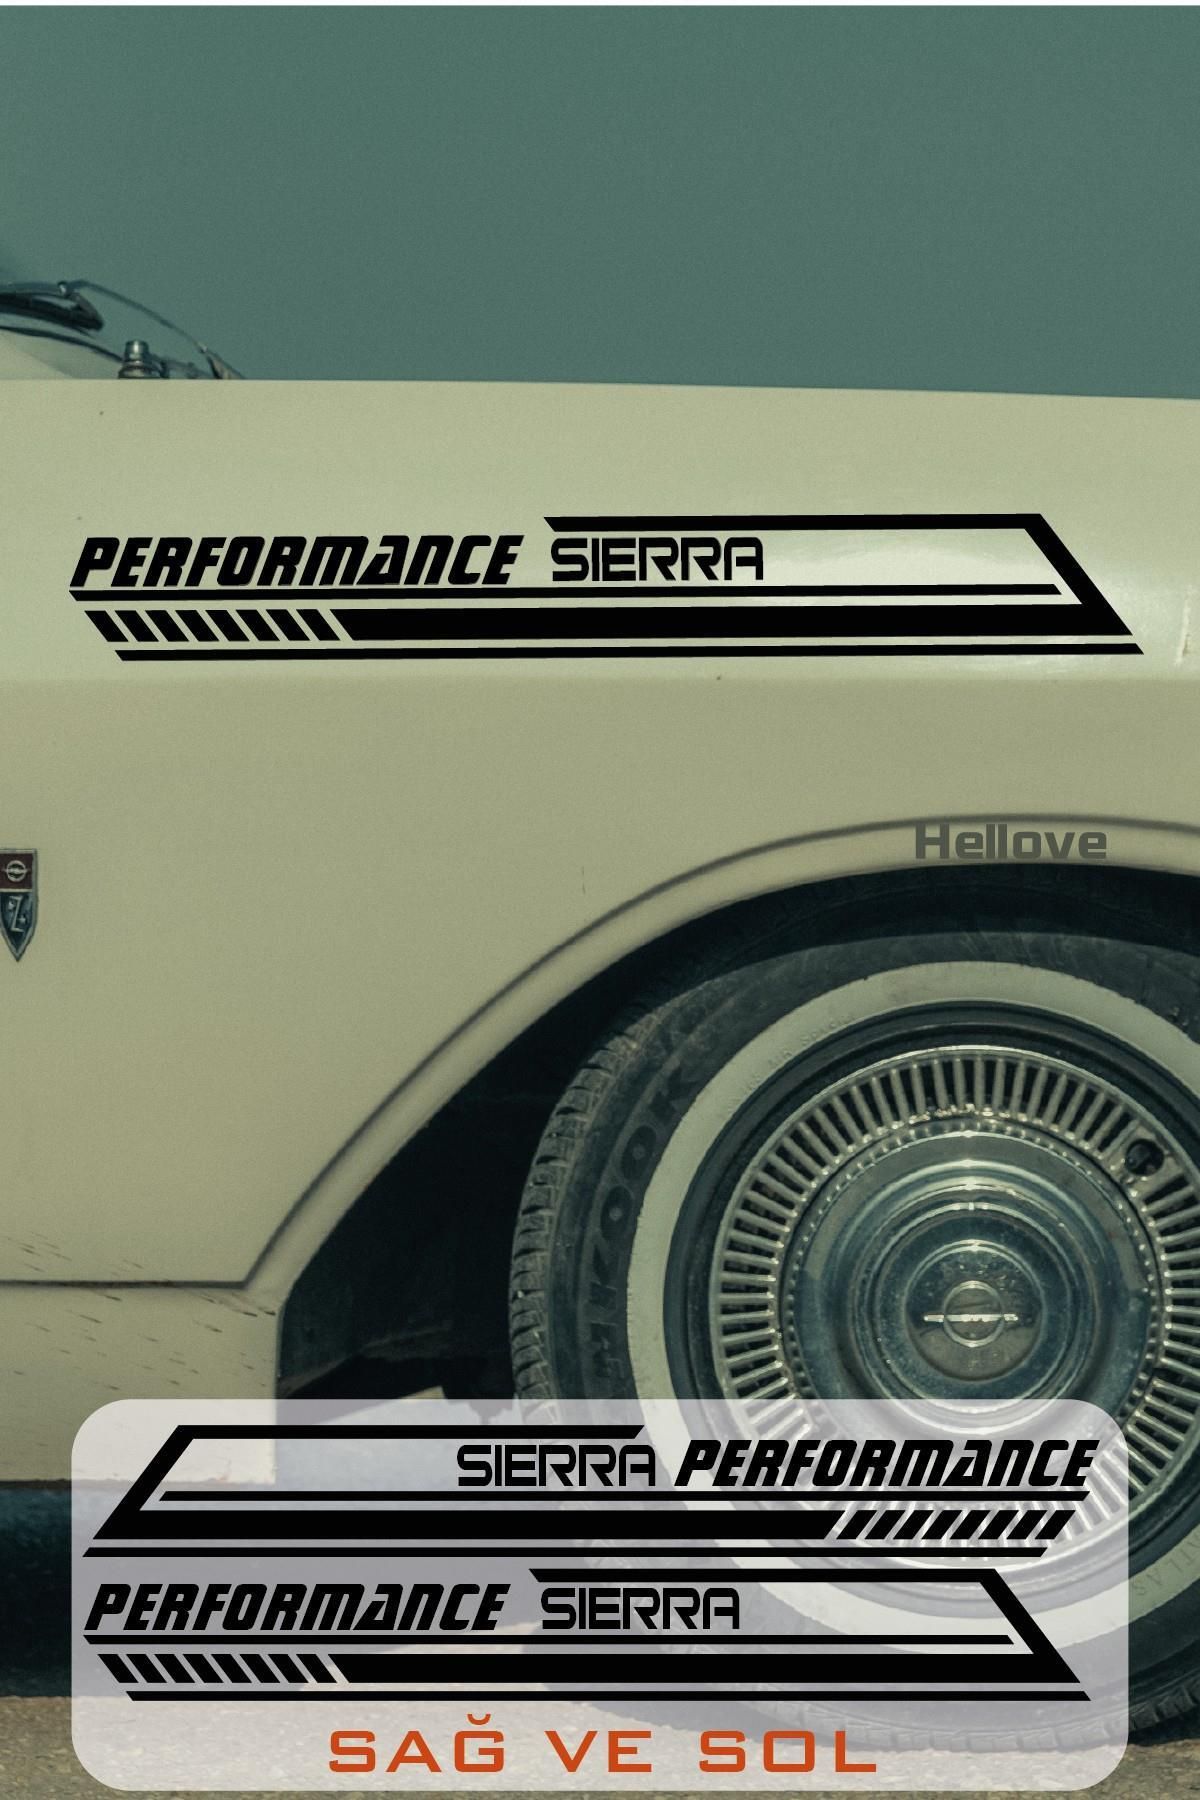 Hellove Ford Sierra Yan Şerit Performance Oto Araba Sticker Sağ ve Sol Siyah 55*16 Cm